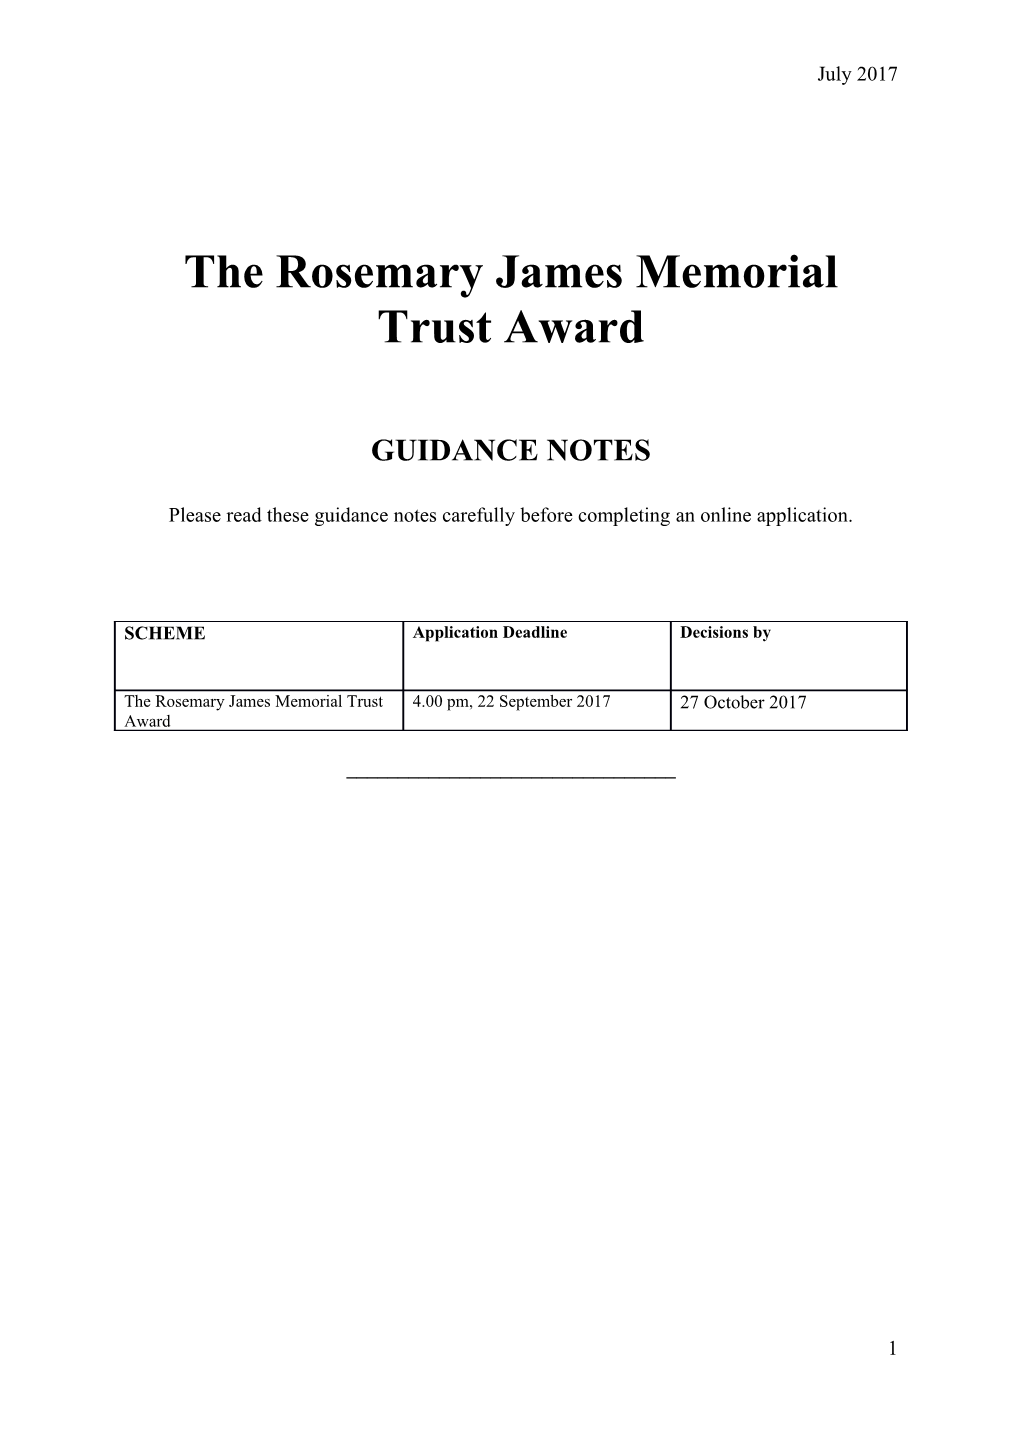 The Rosemary James Memorial Trust Award